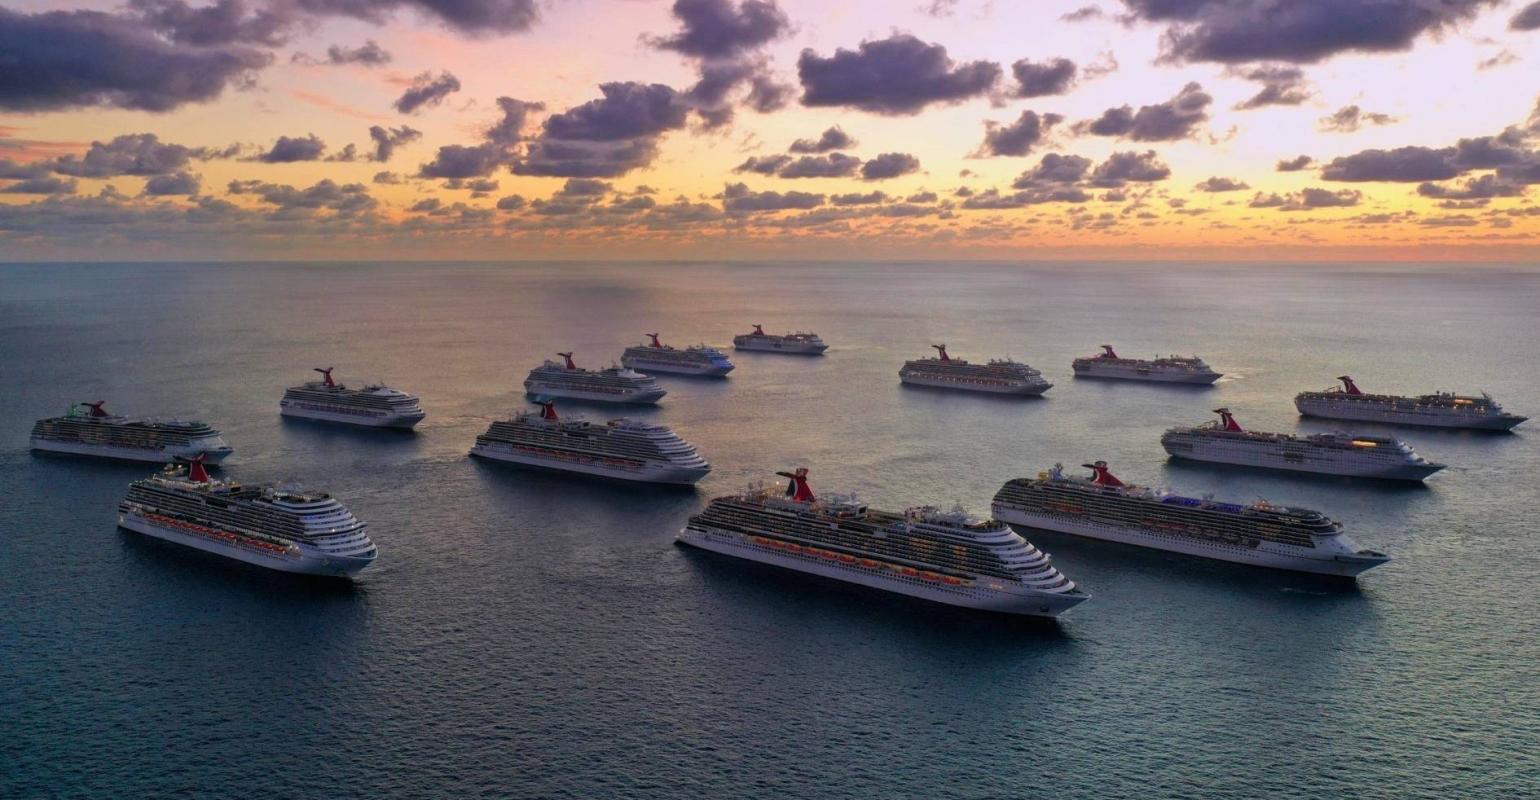 CRUISE Carnival fleet off Bahamas for crew repatriation